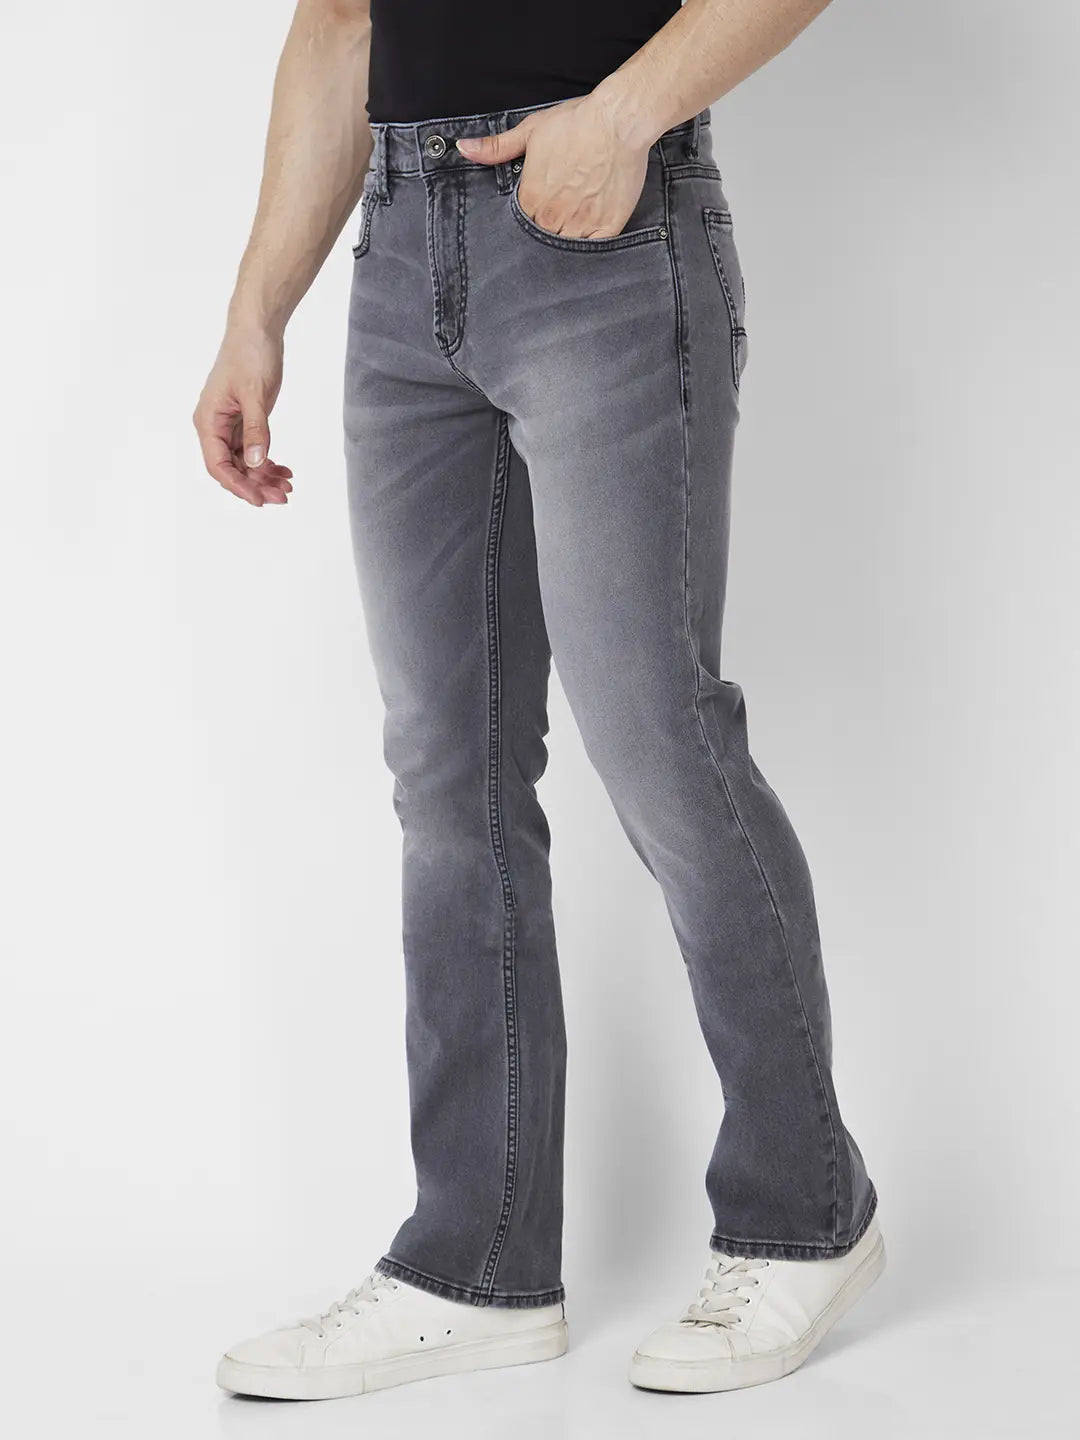 Spykar Men Light Grey Cotton Stretch Comfort Fit Regular Length Clean Look Mid Rise Jeans (Rafter)